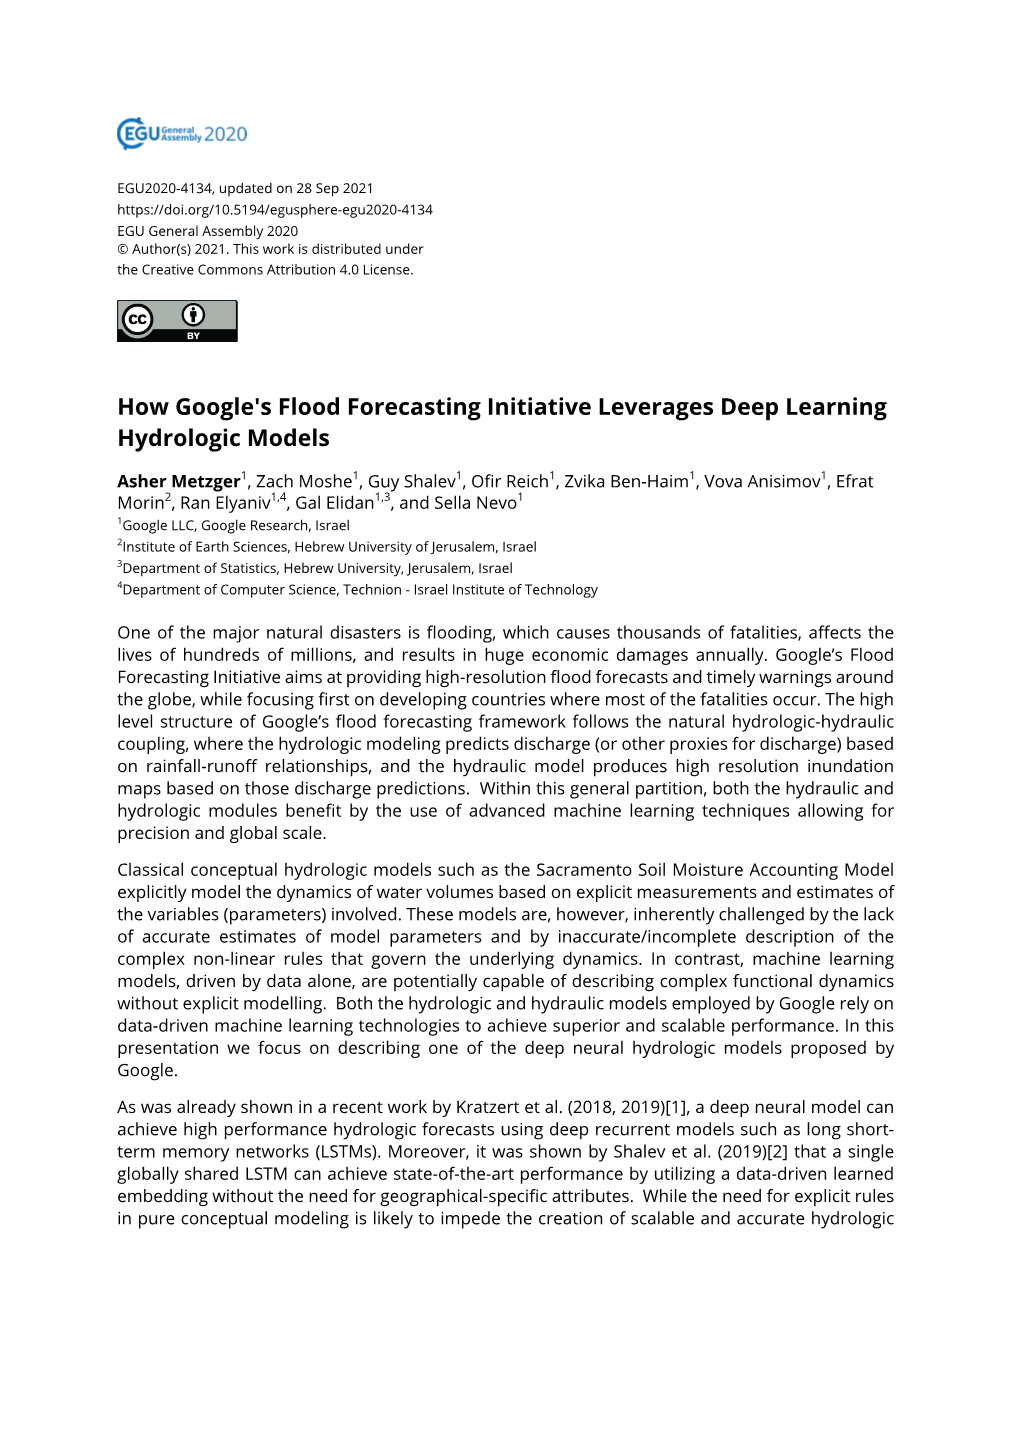 How Google's Flood Forecasting Initiative Leverages Deep Learning Hydrologic Models